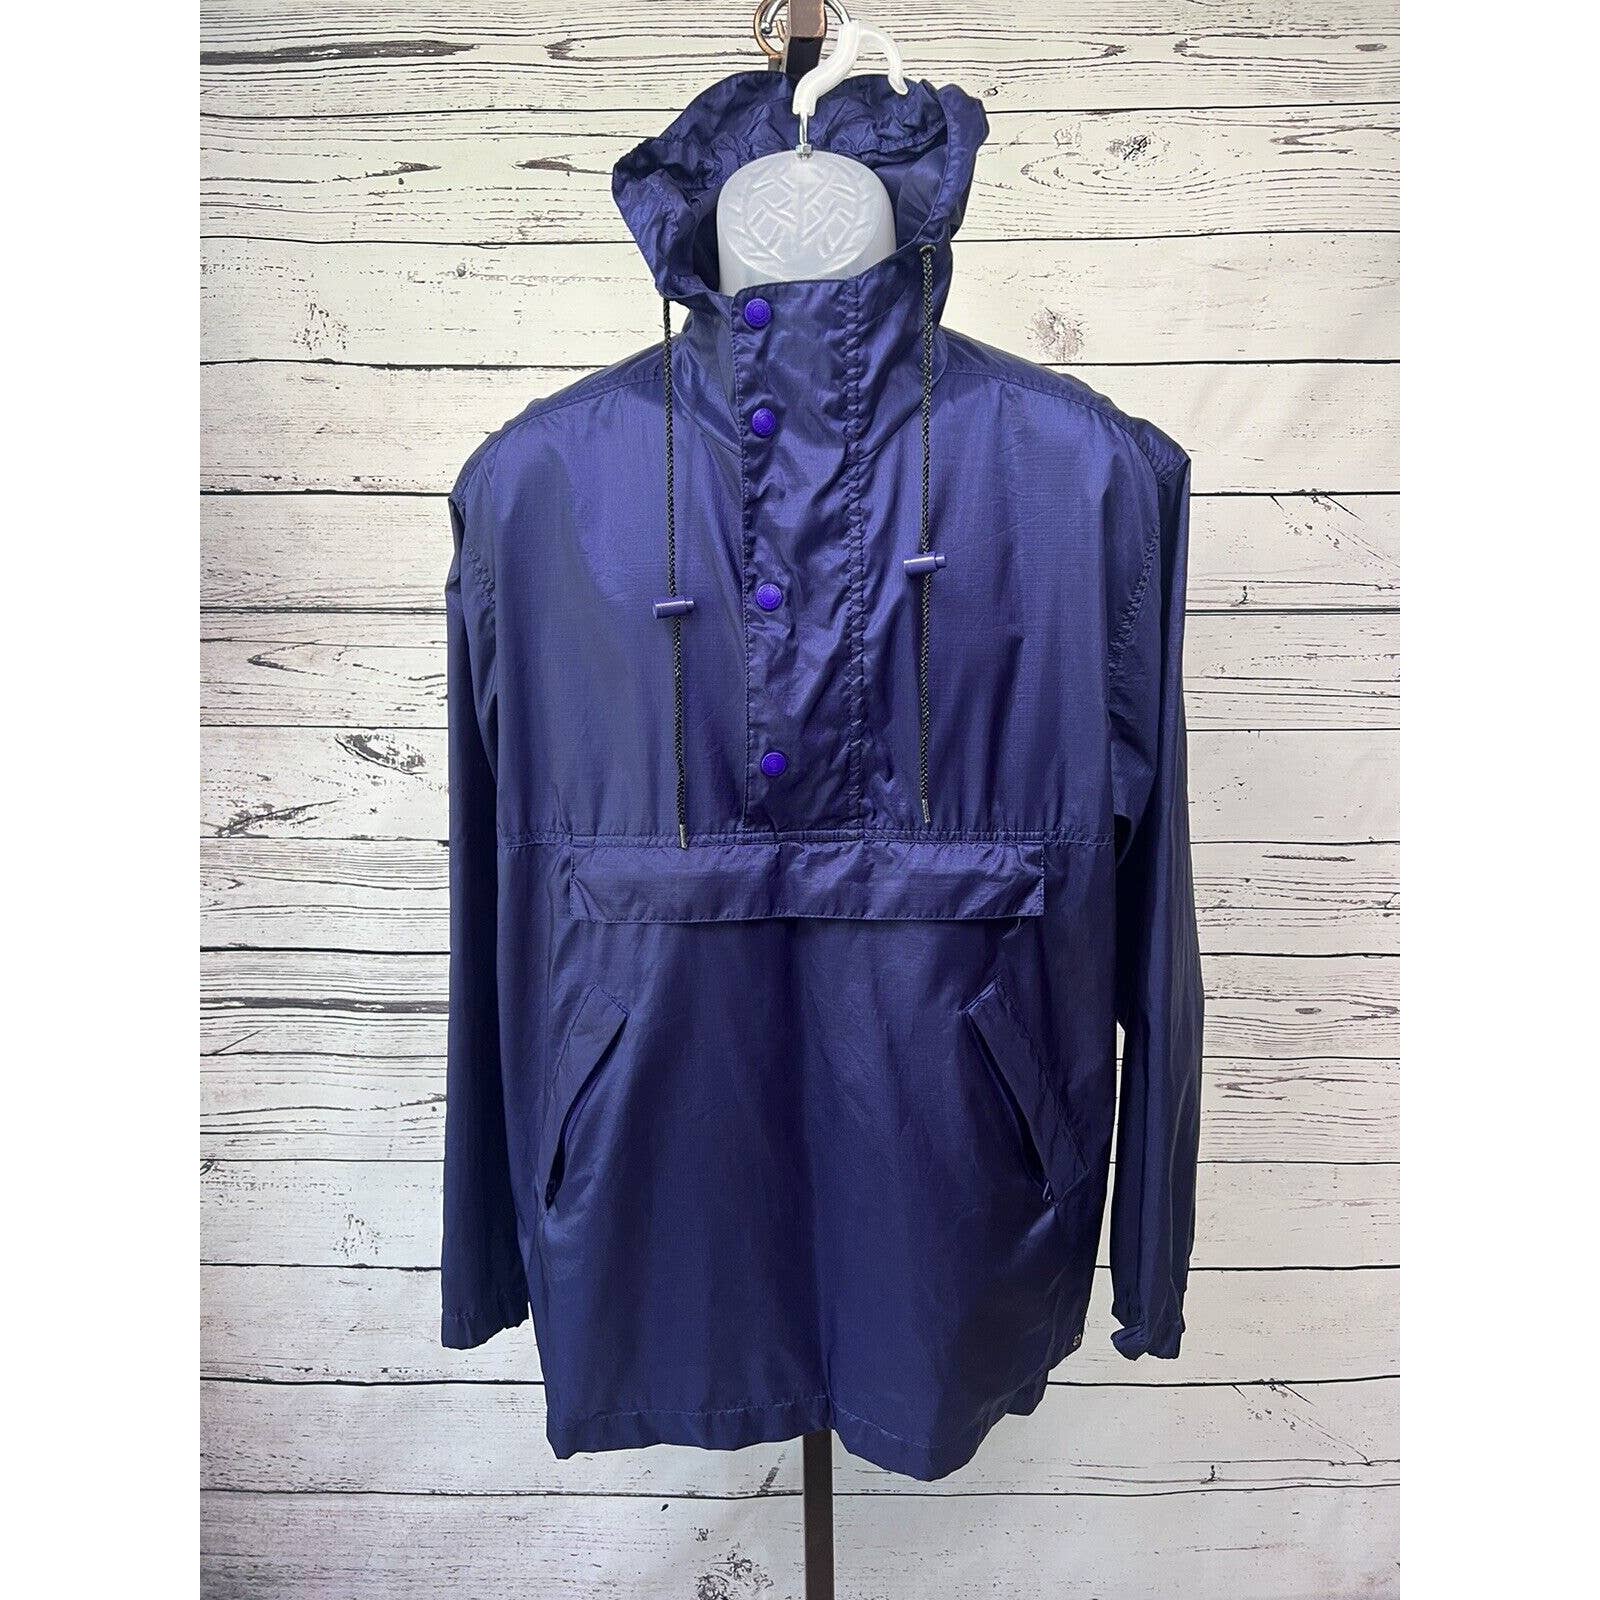 Eddie Bauer Sak Anorak Windbreaker Mens Medium Purple Rain Jacket Pullover